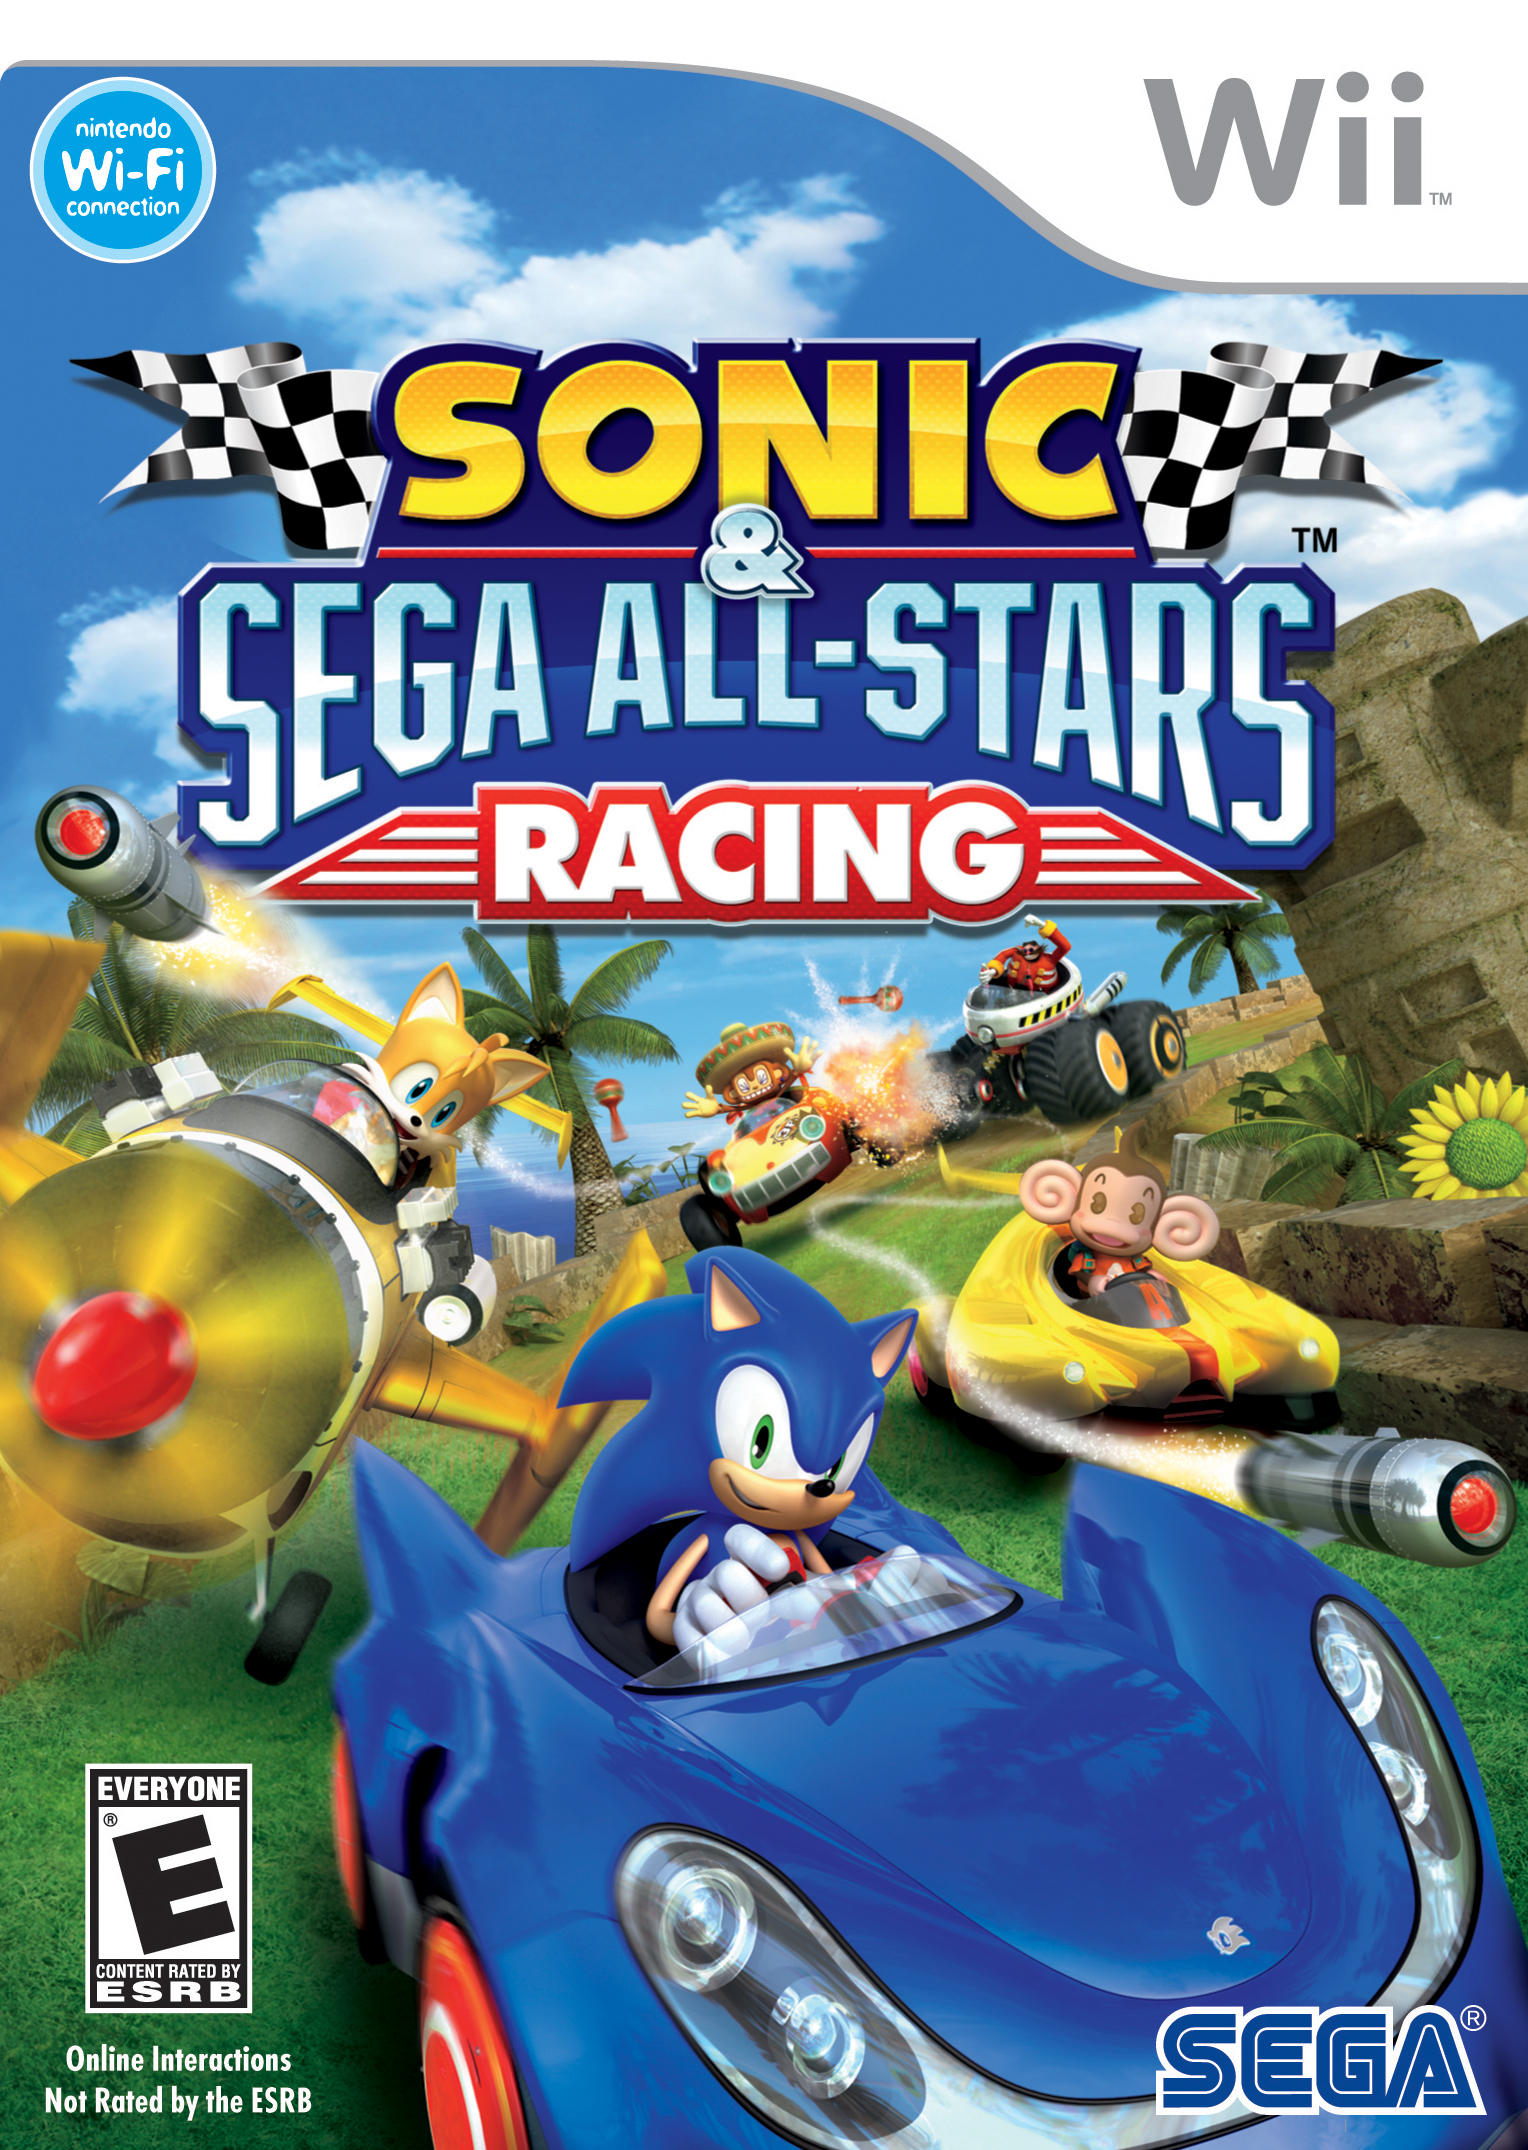 Sonic_%26_Sega_all-stars_racing_Wii.jpg